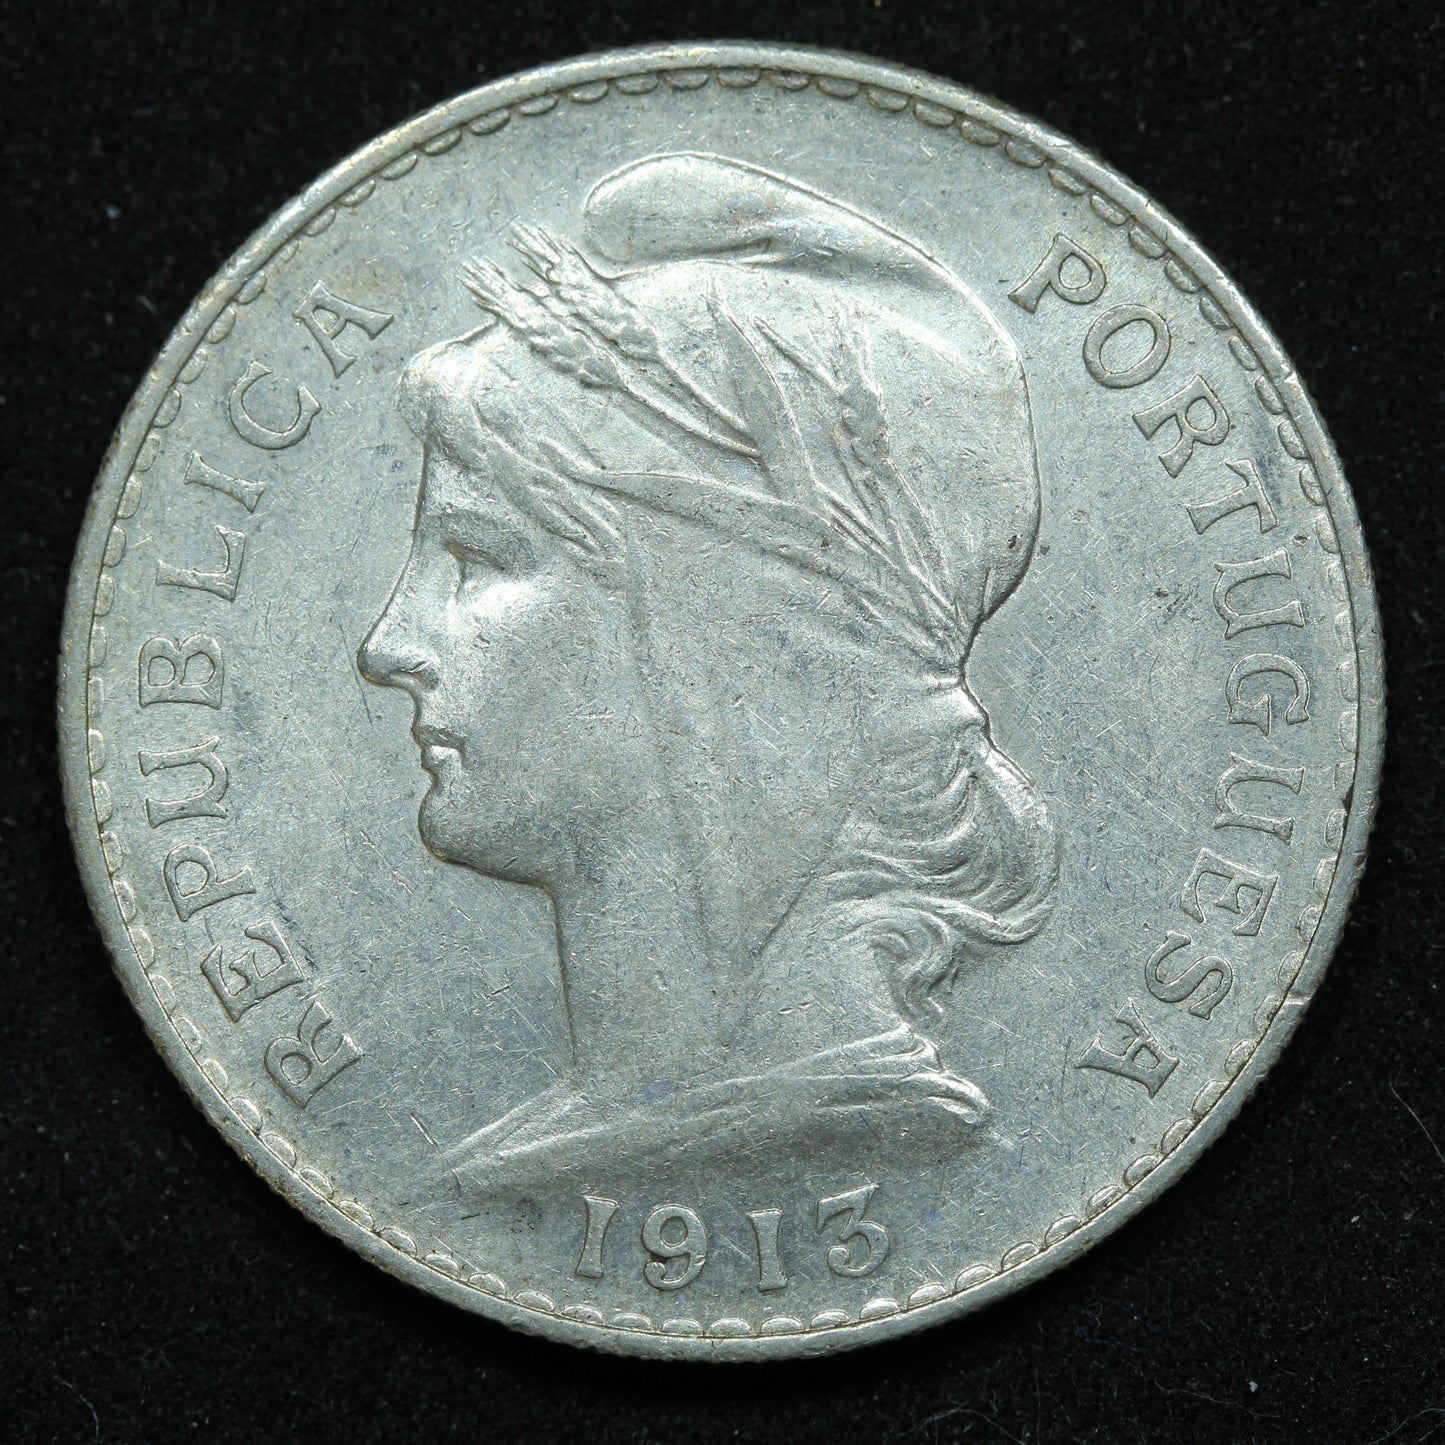 1913 50 Centavos Portugal Silver Coin -  KM# 561